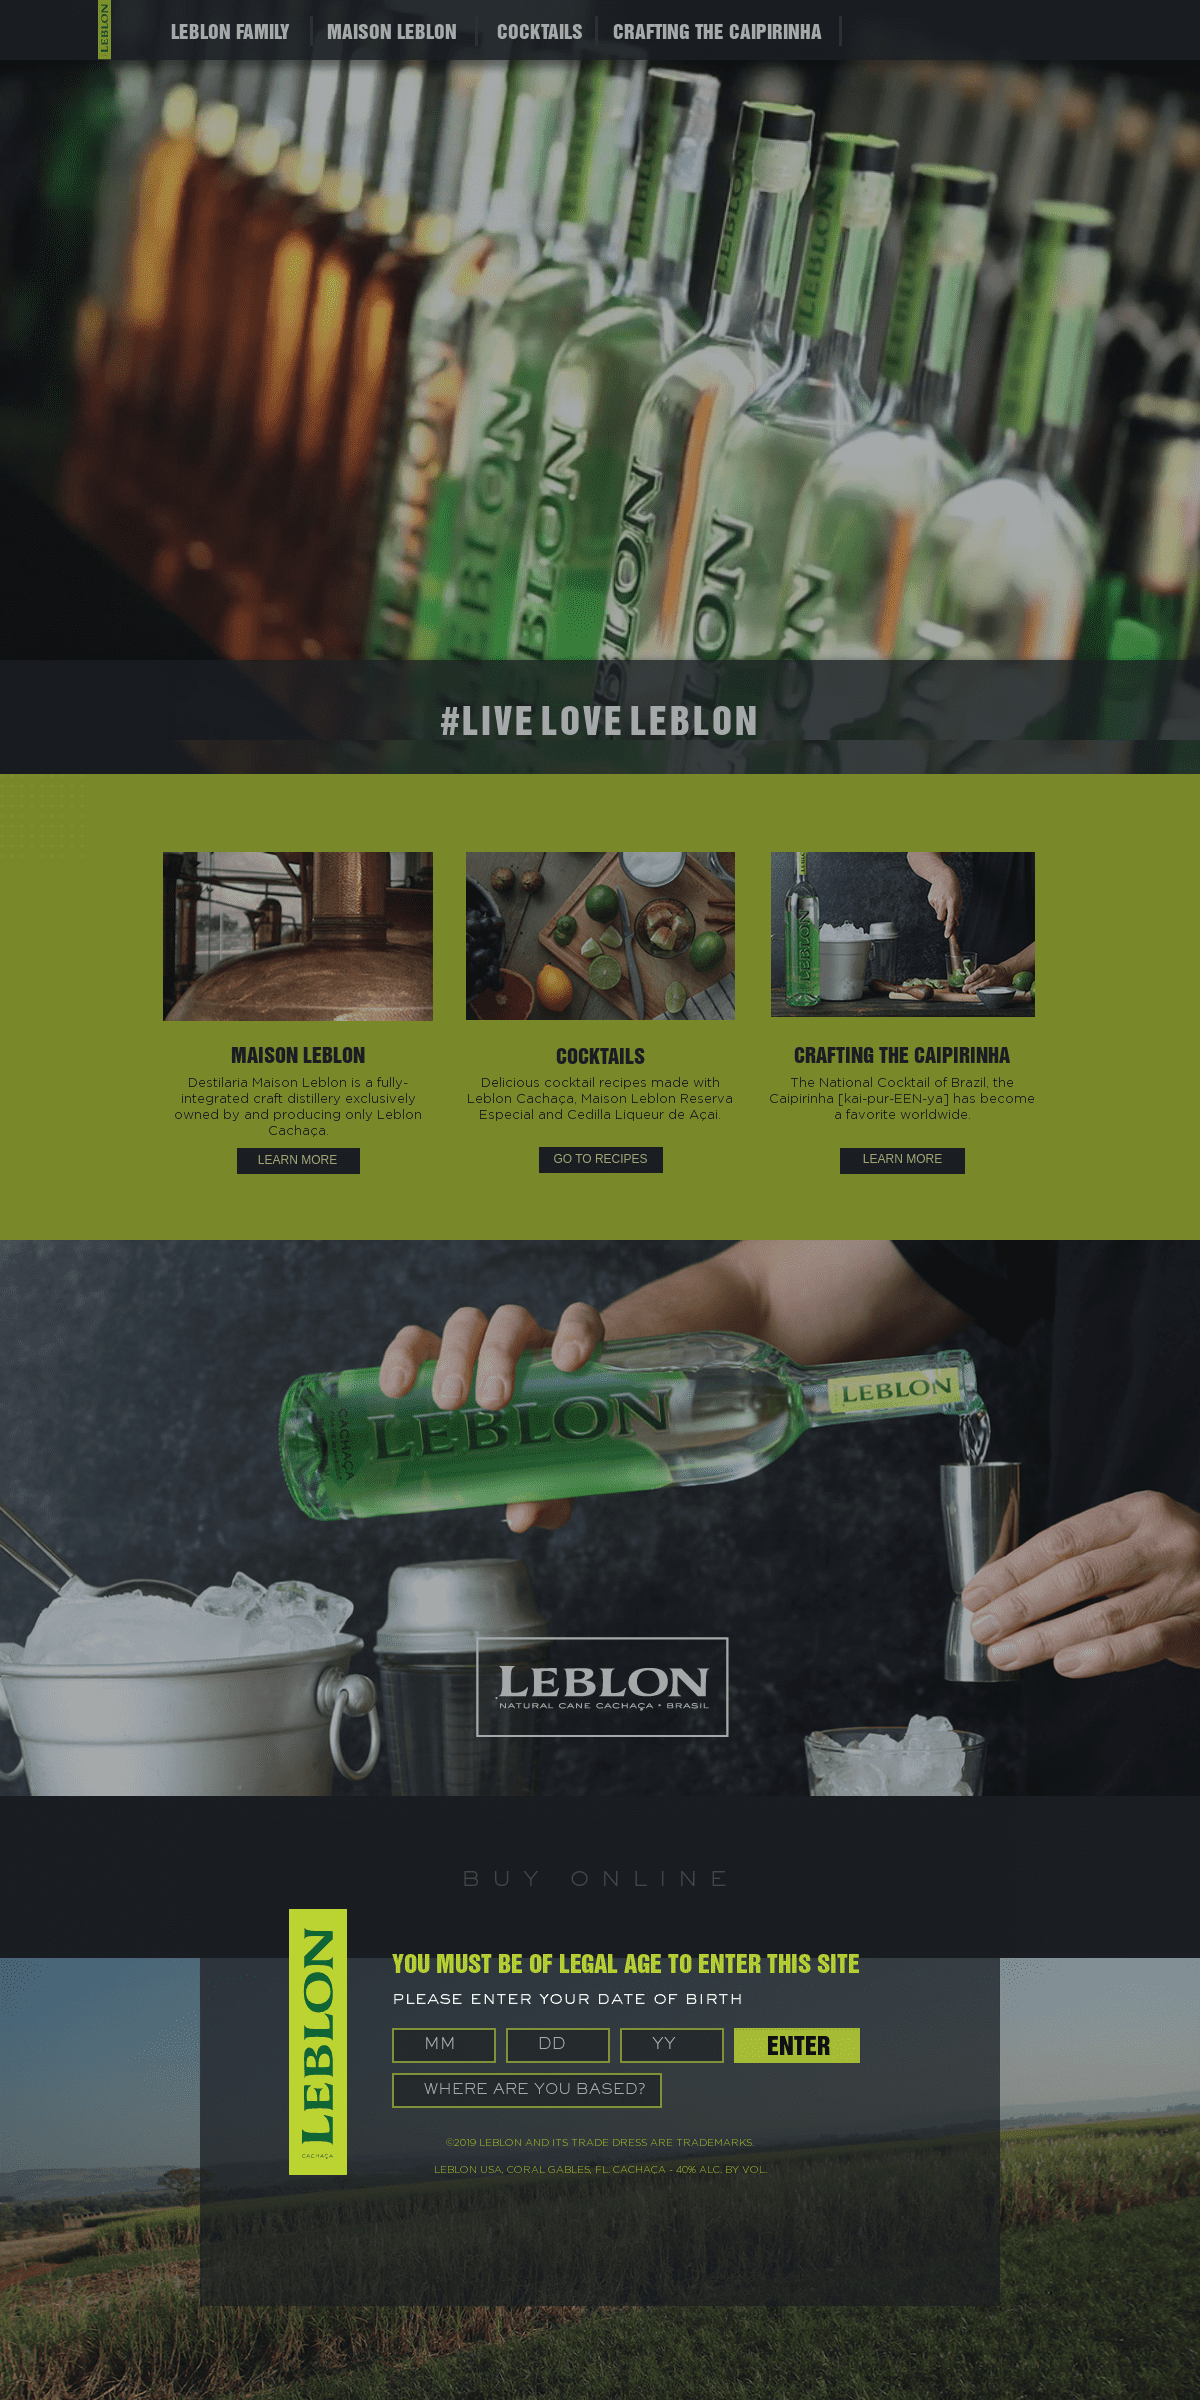 A complete backup of leblon.com